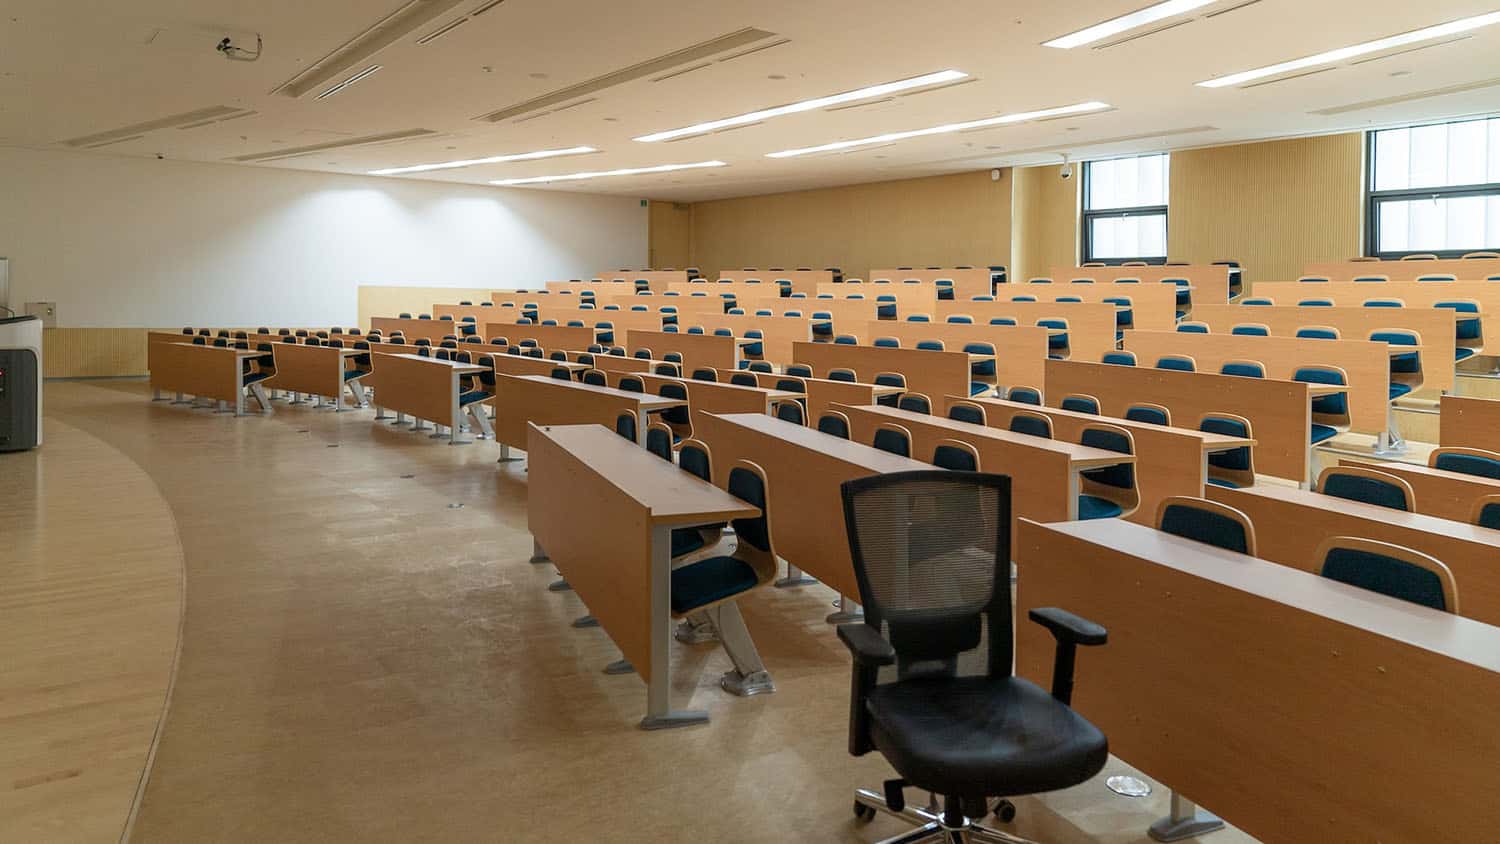 image shows an empty university classroom